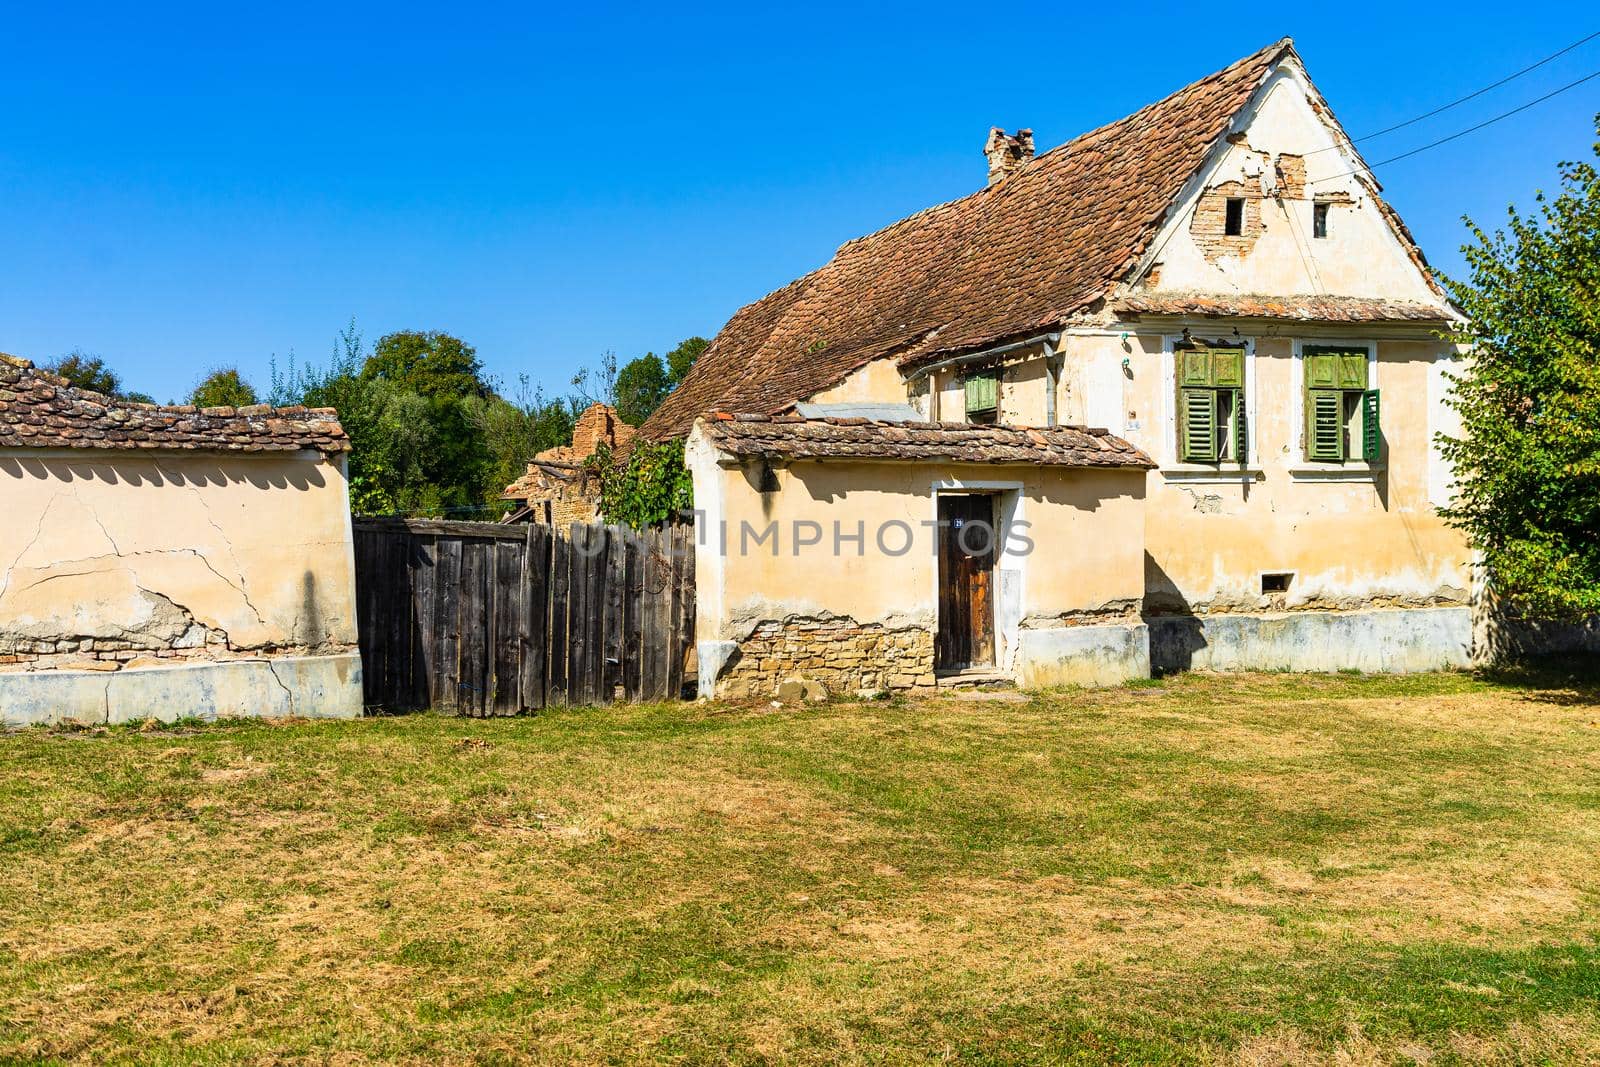 Typical rural landscape and rustic houses in Barcut -Bekokten, Transylvania, Romania, 2021. by vladispas